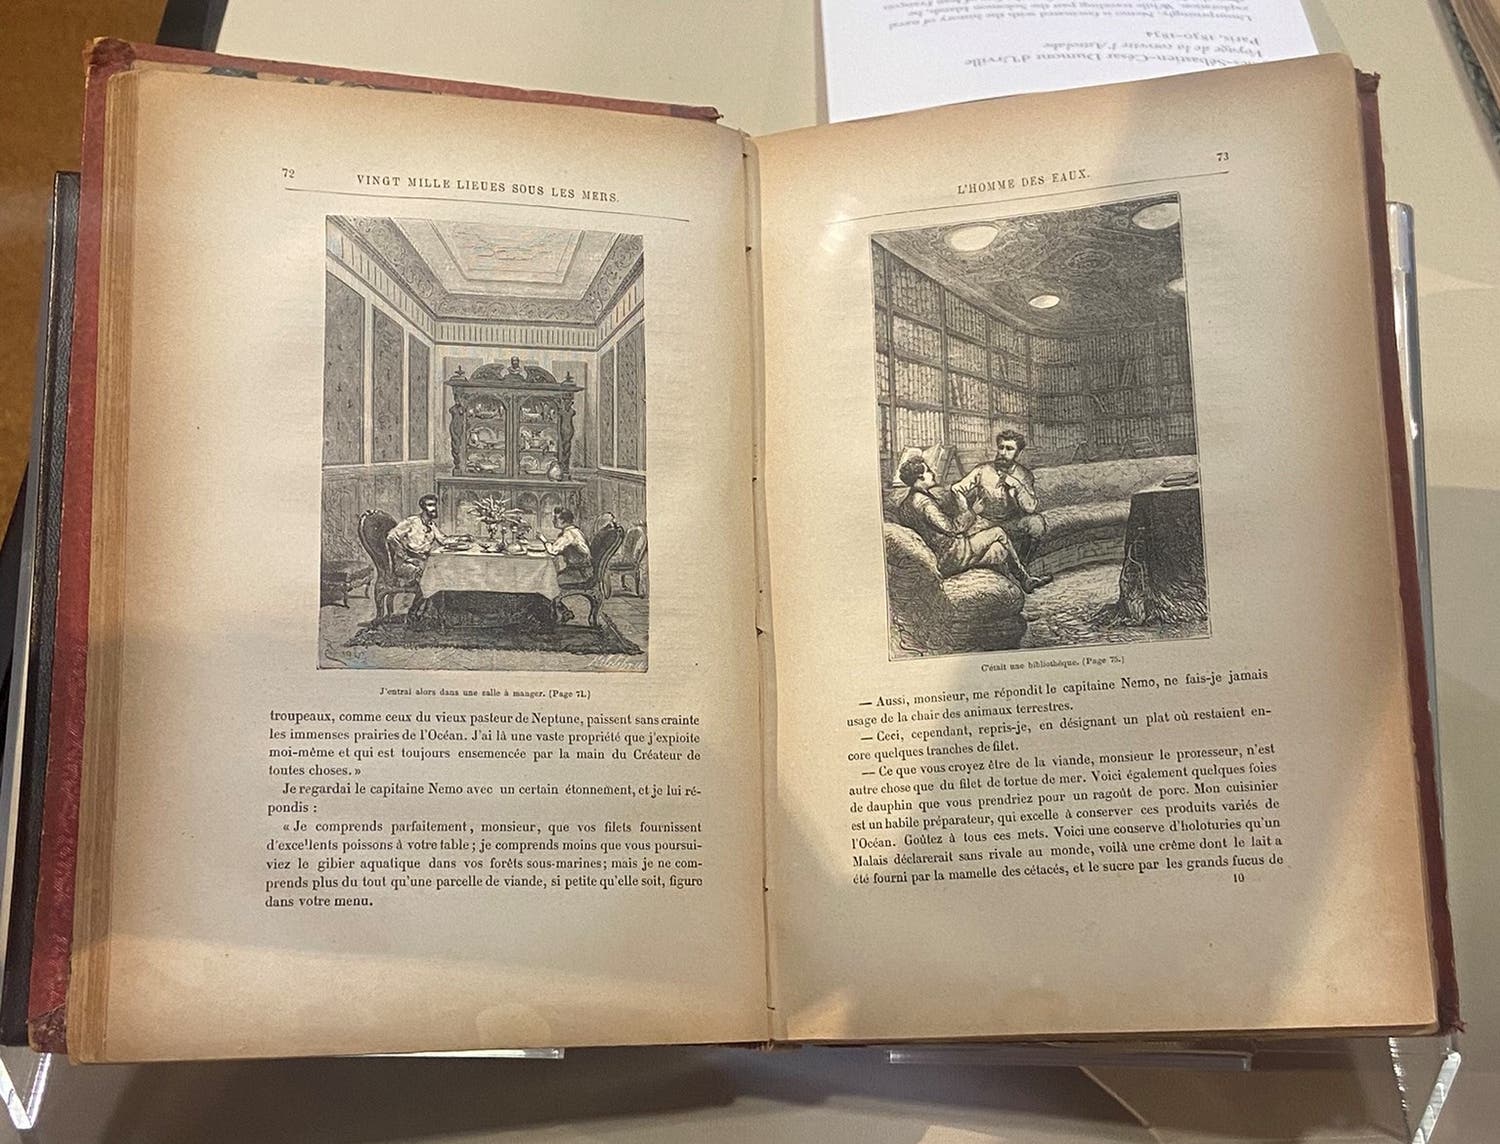 Photo of book by Jules Verne, Vingt mille lieues sous les mers